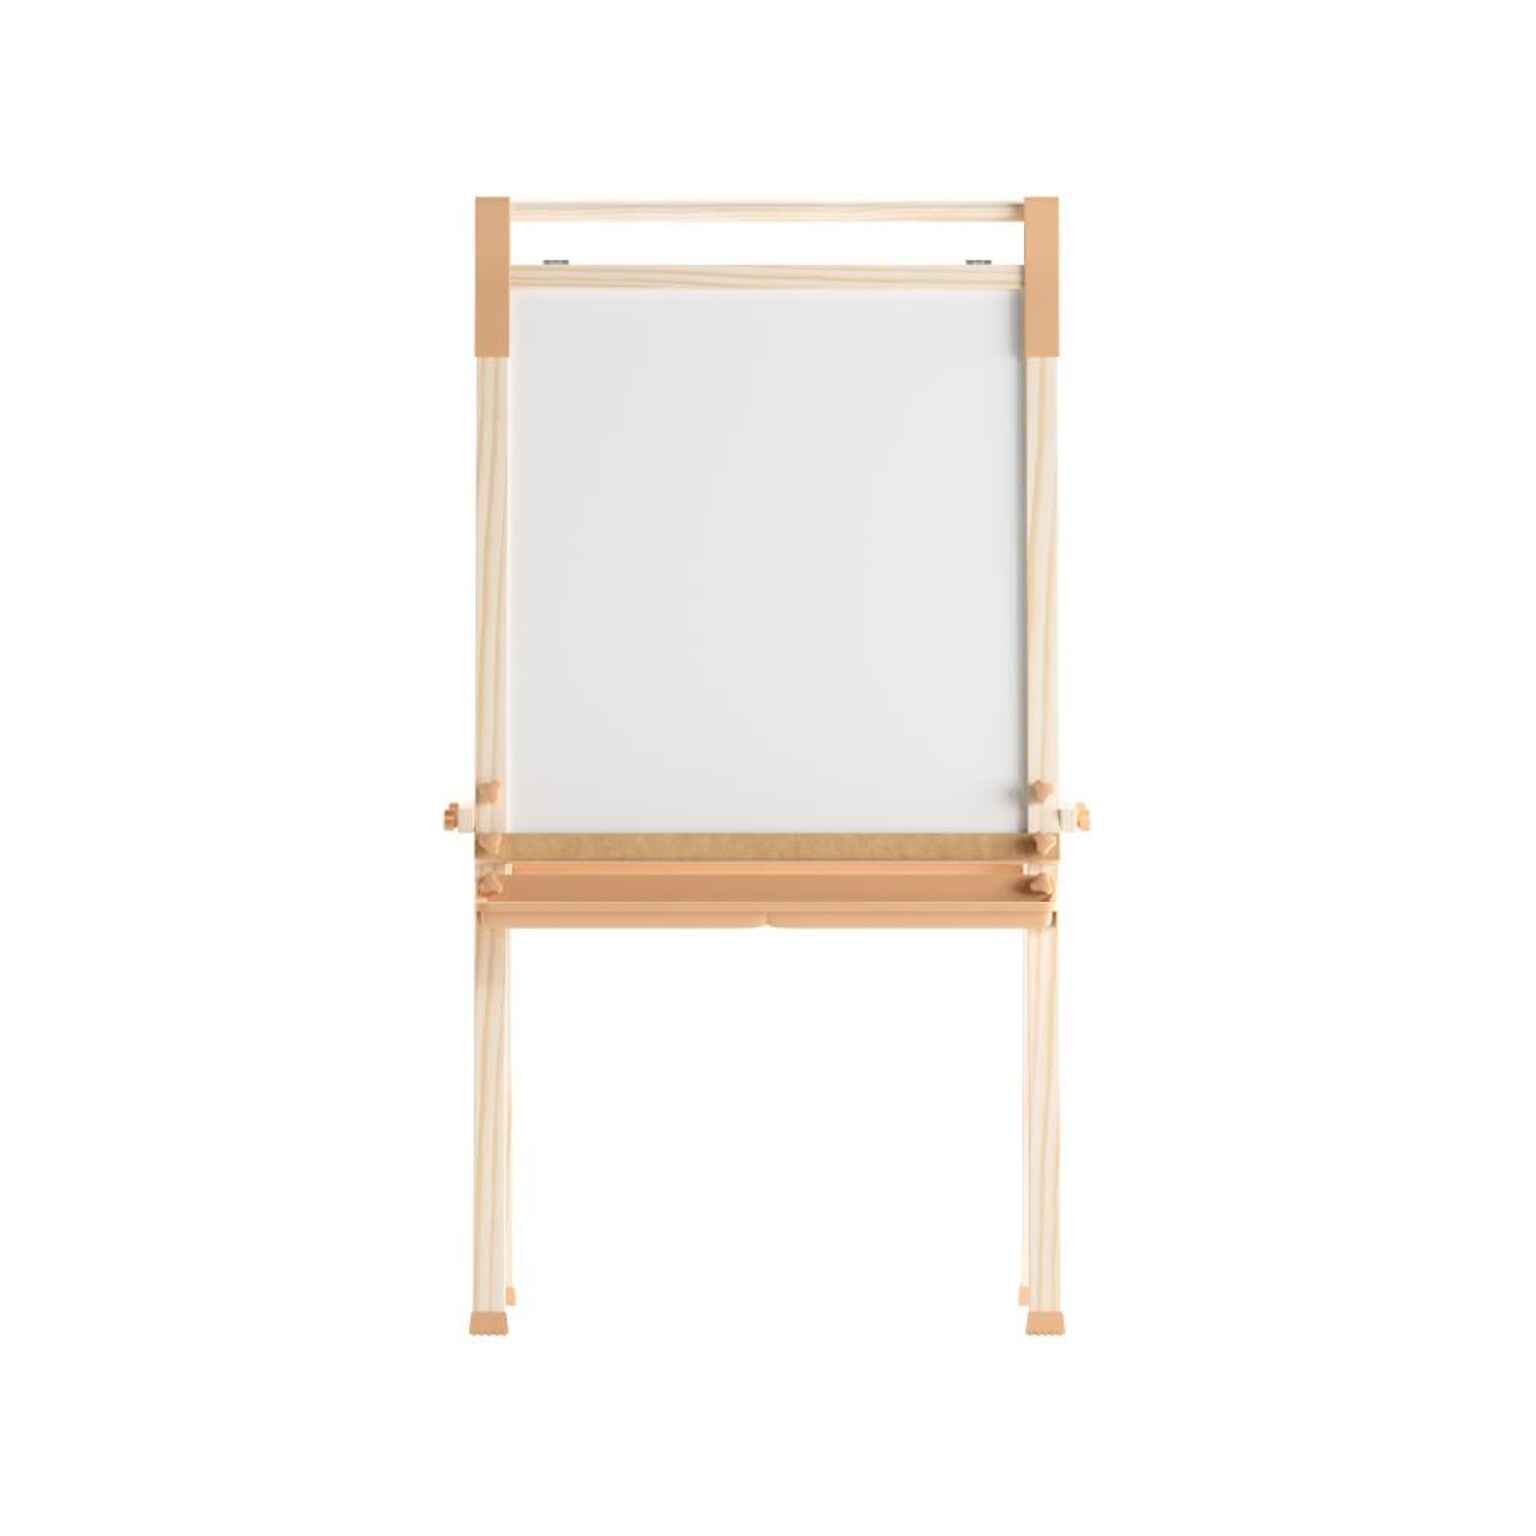 Flash Furniture Bright Beginnings Art Easel, 49, Natural Birch Plywood (MK-ART-9000-GG)